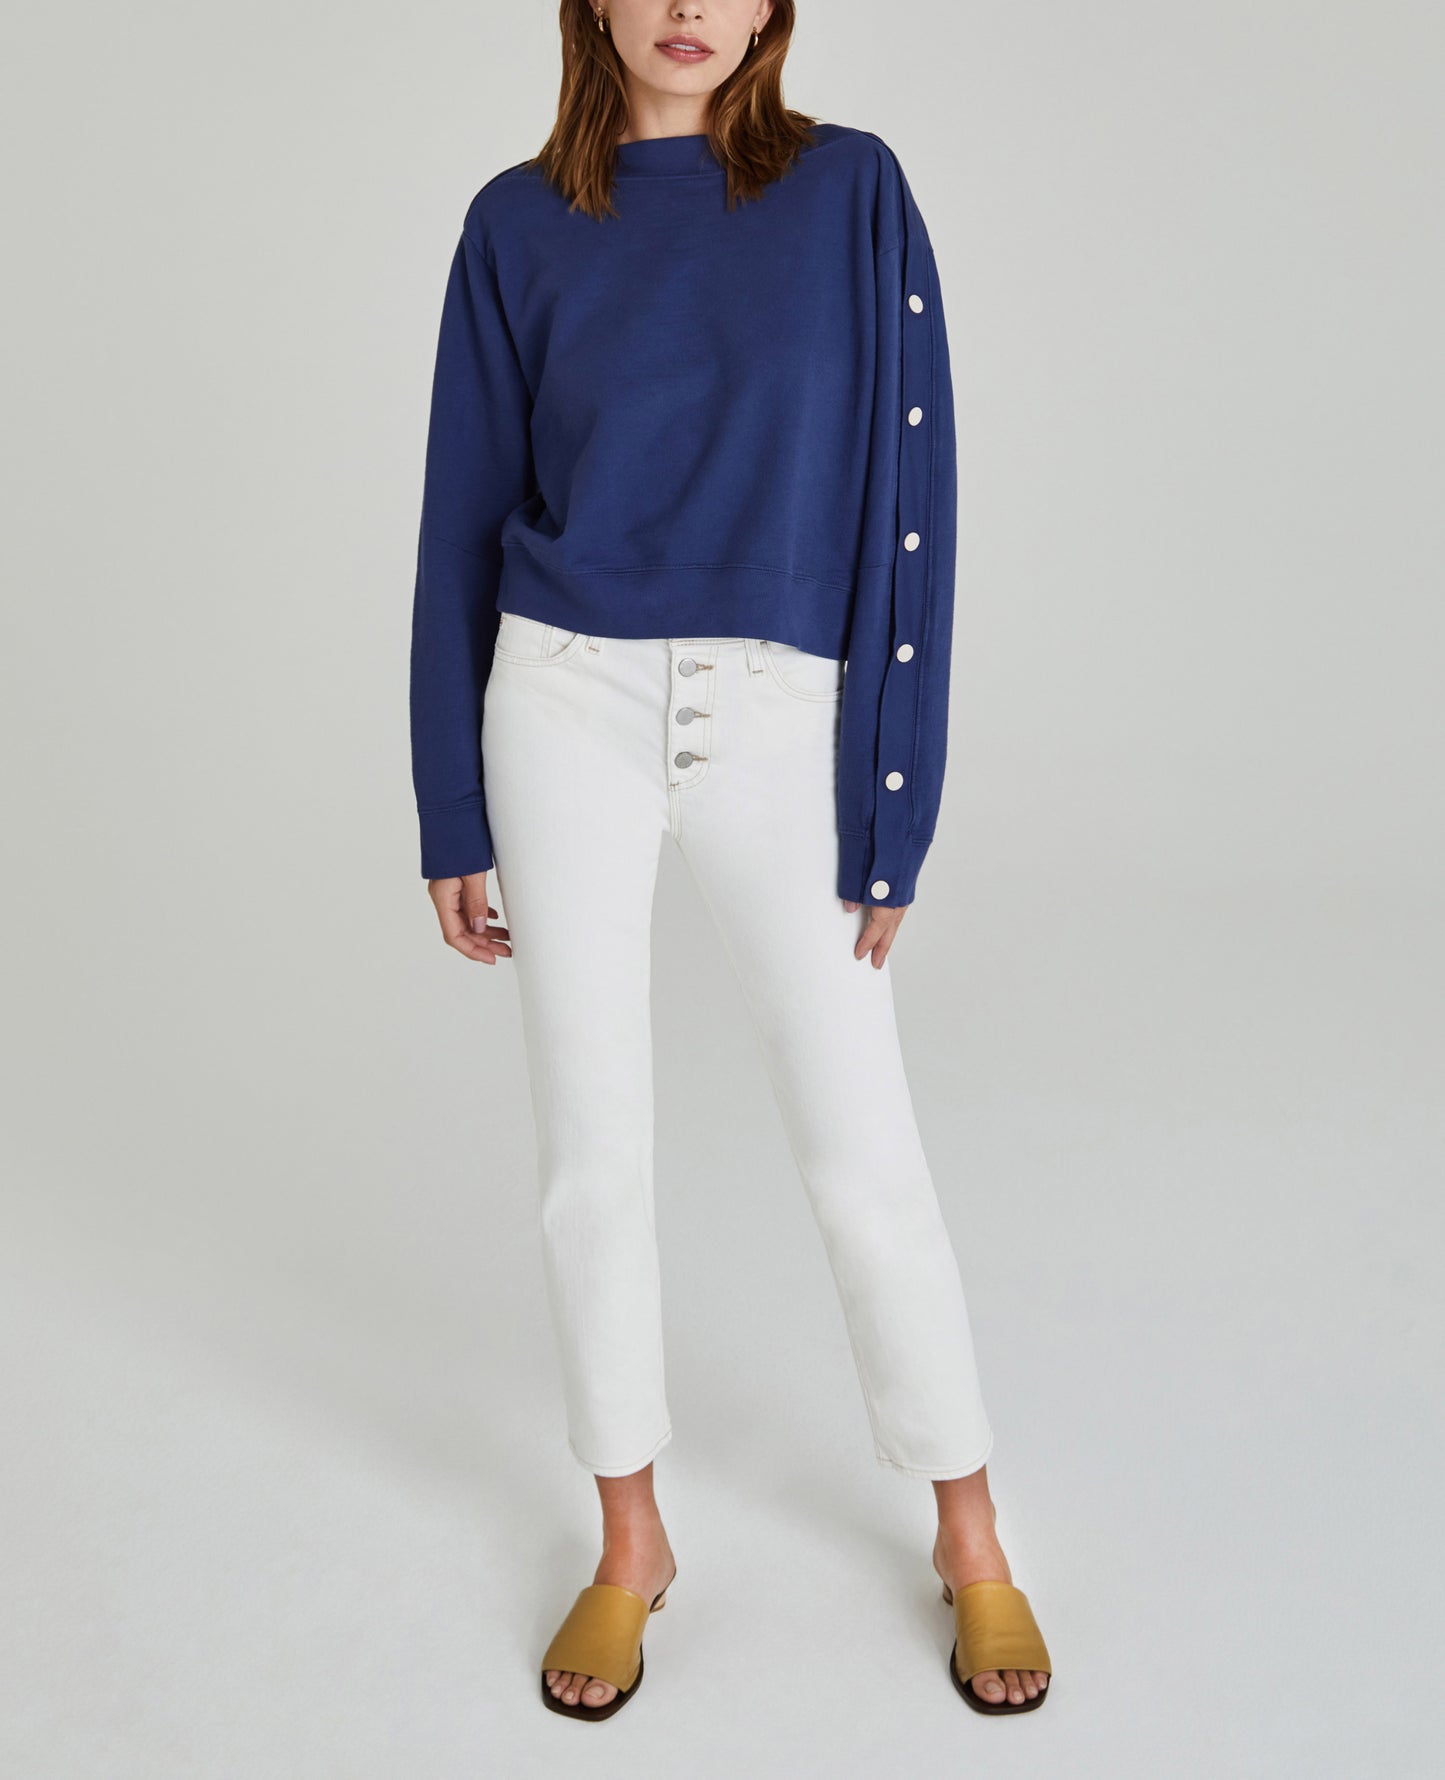 Cyra Sweatshirt Bright Indigo Snap Button Sweatshirt Women Tops Photo 4